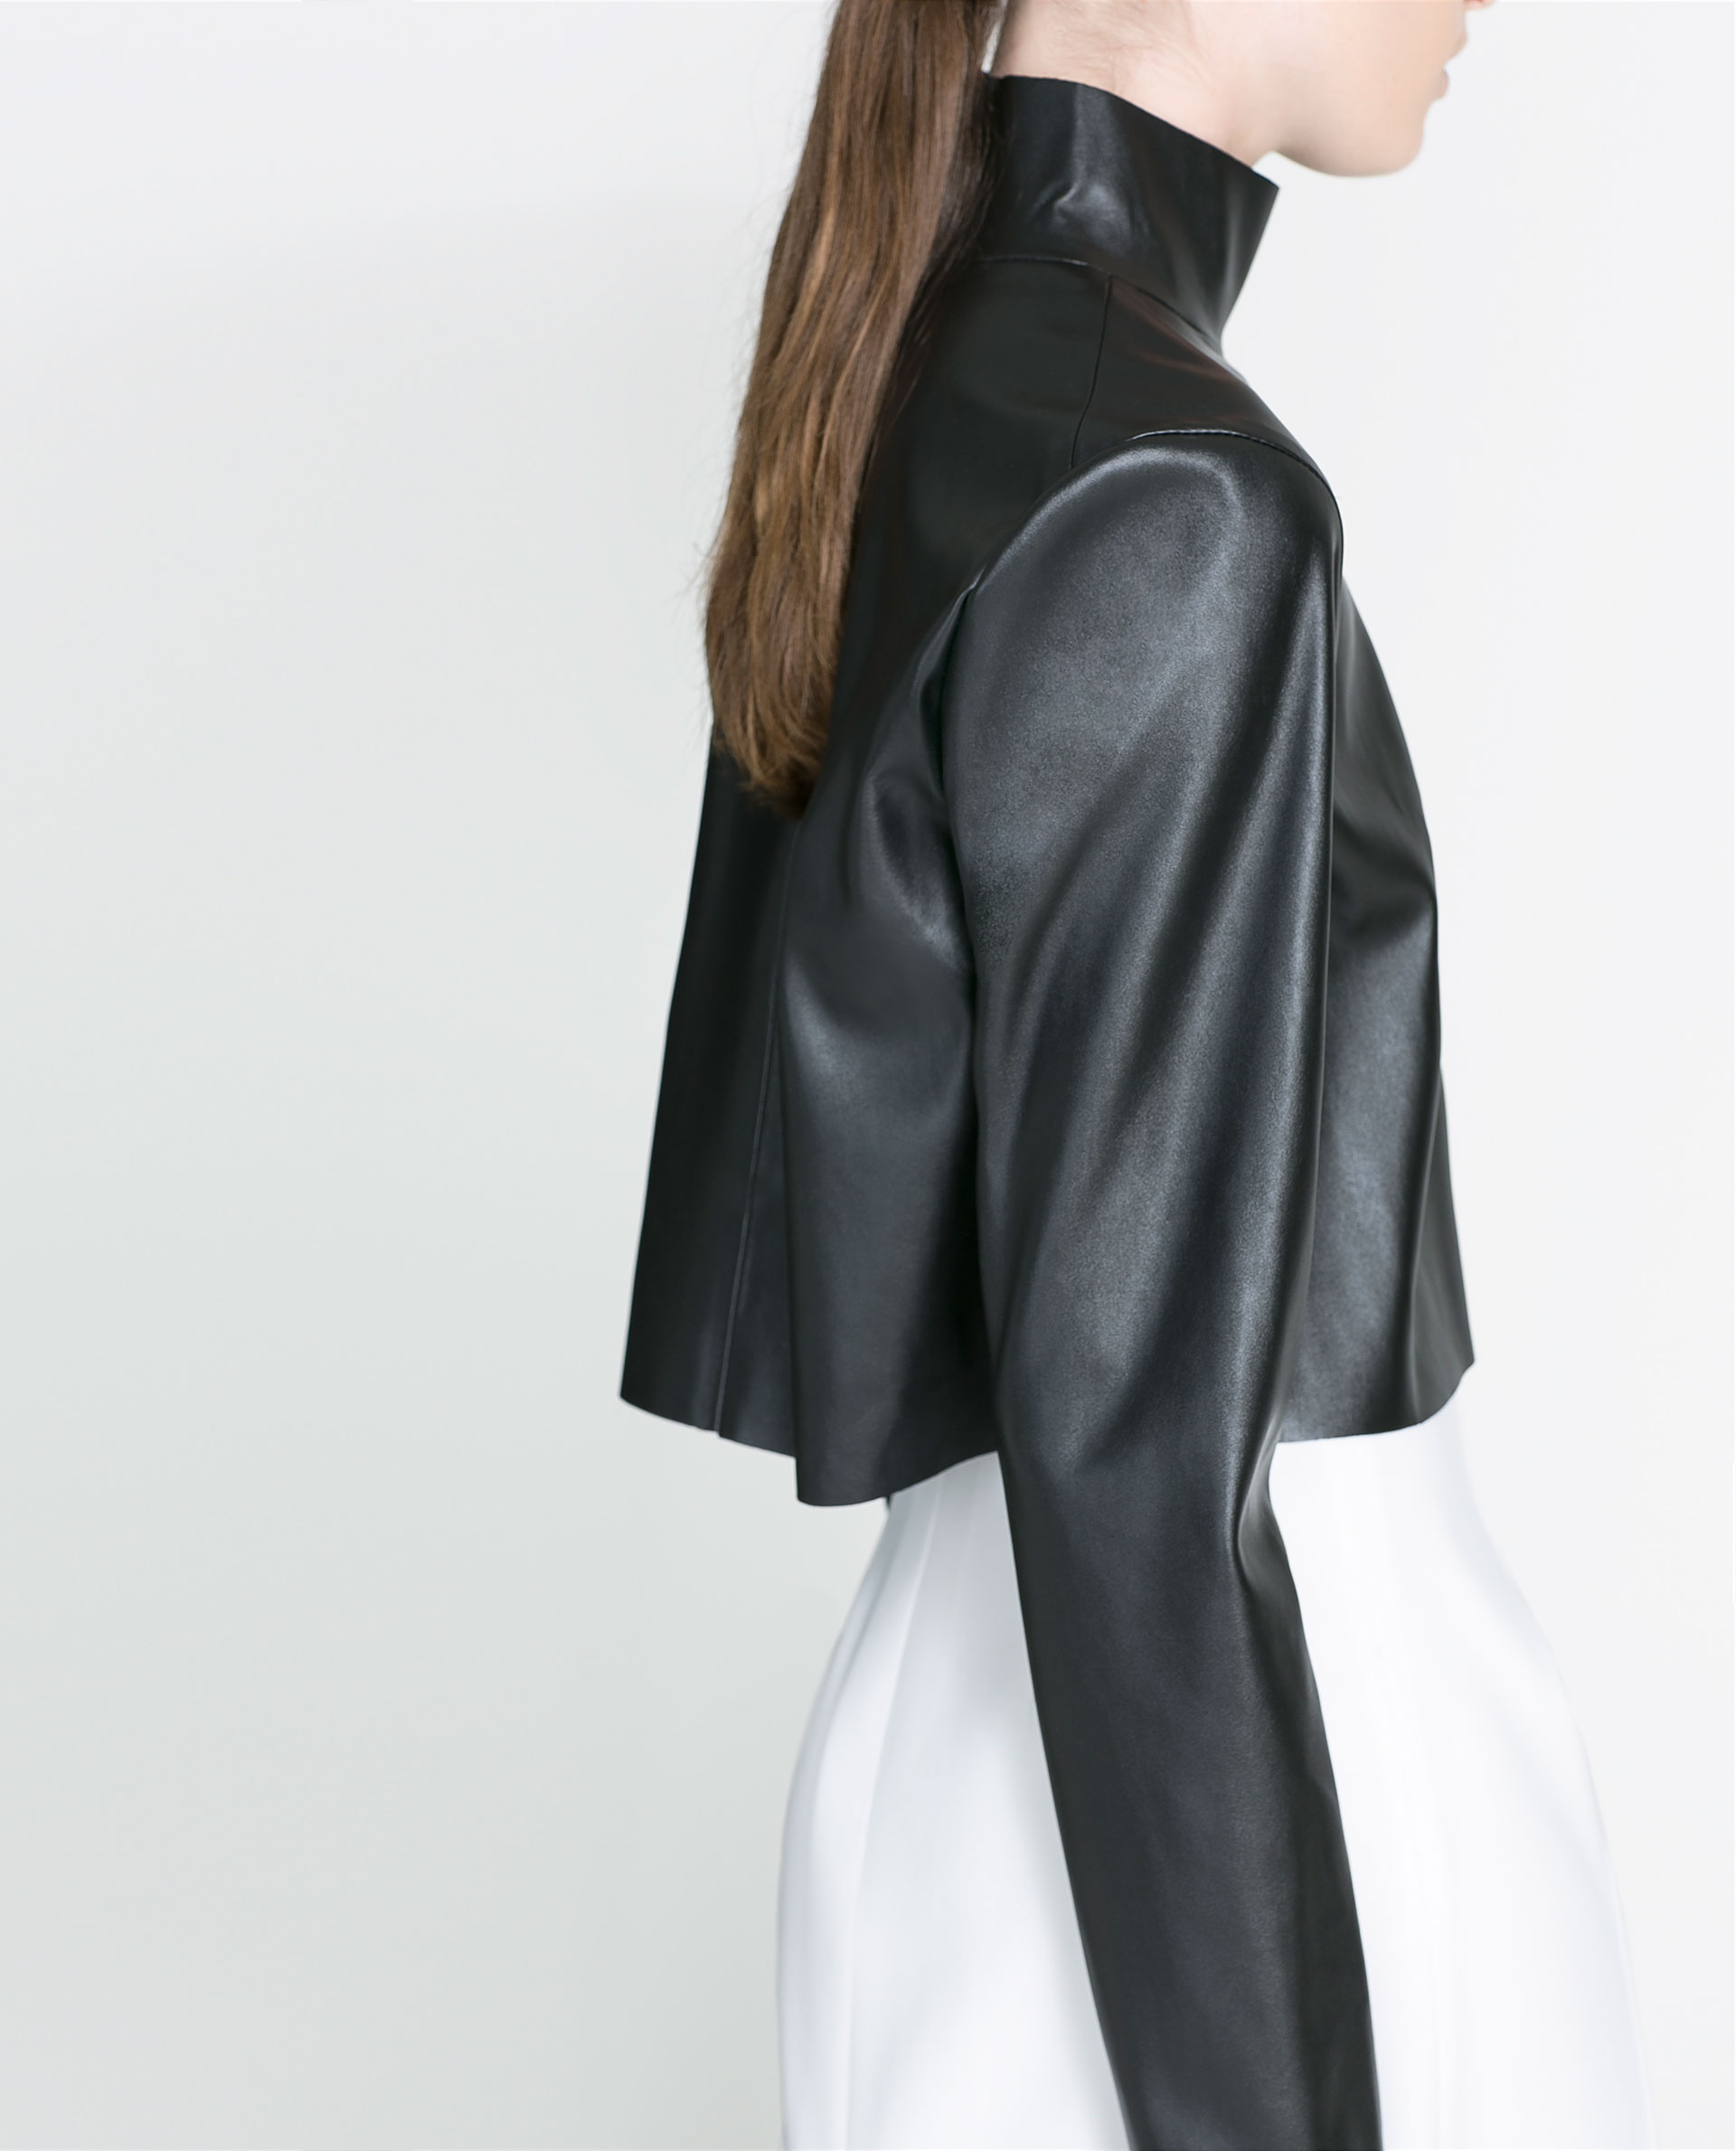 Zara High Collar Studio Top in Black | Lyst